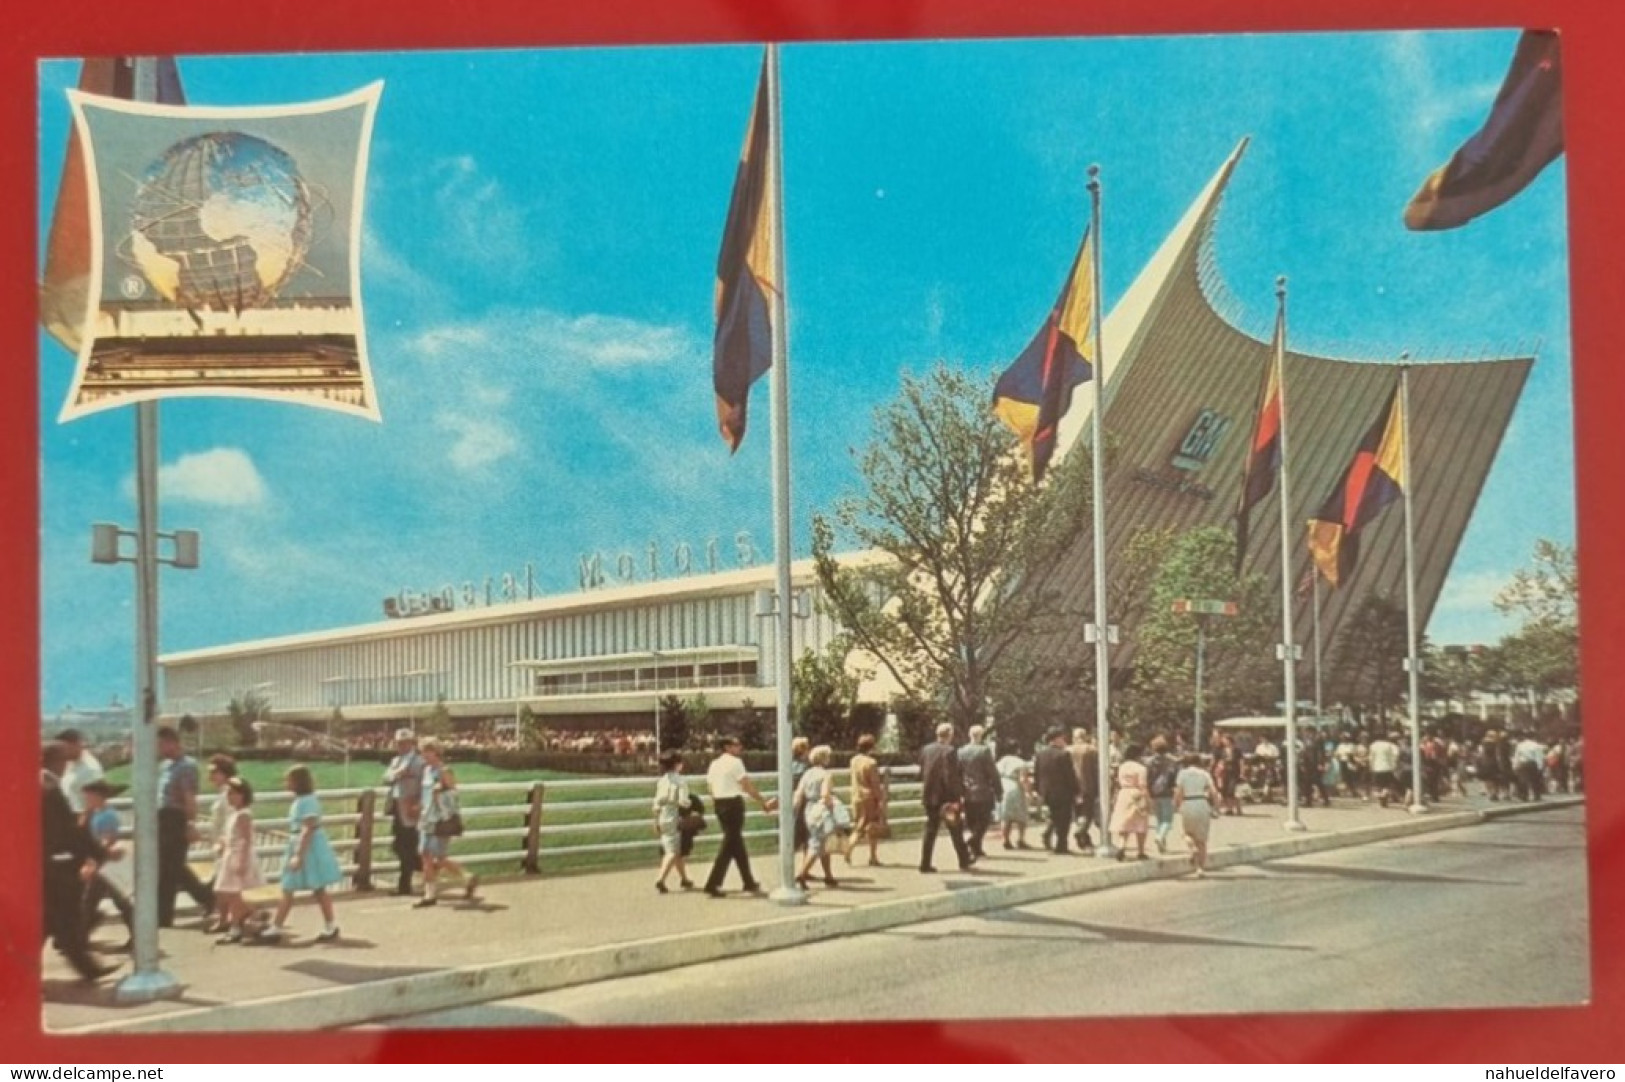 Uncirculated Postcard - USA - NY, NEW YORK WORLD'S FAIR 1964-65 - GENERAL MOTORS FUTURAMA BUILDING - Tentoonstellingen